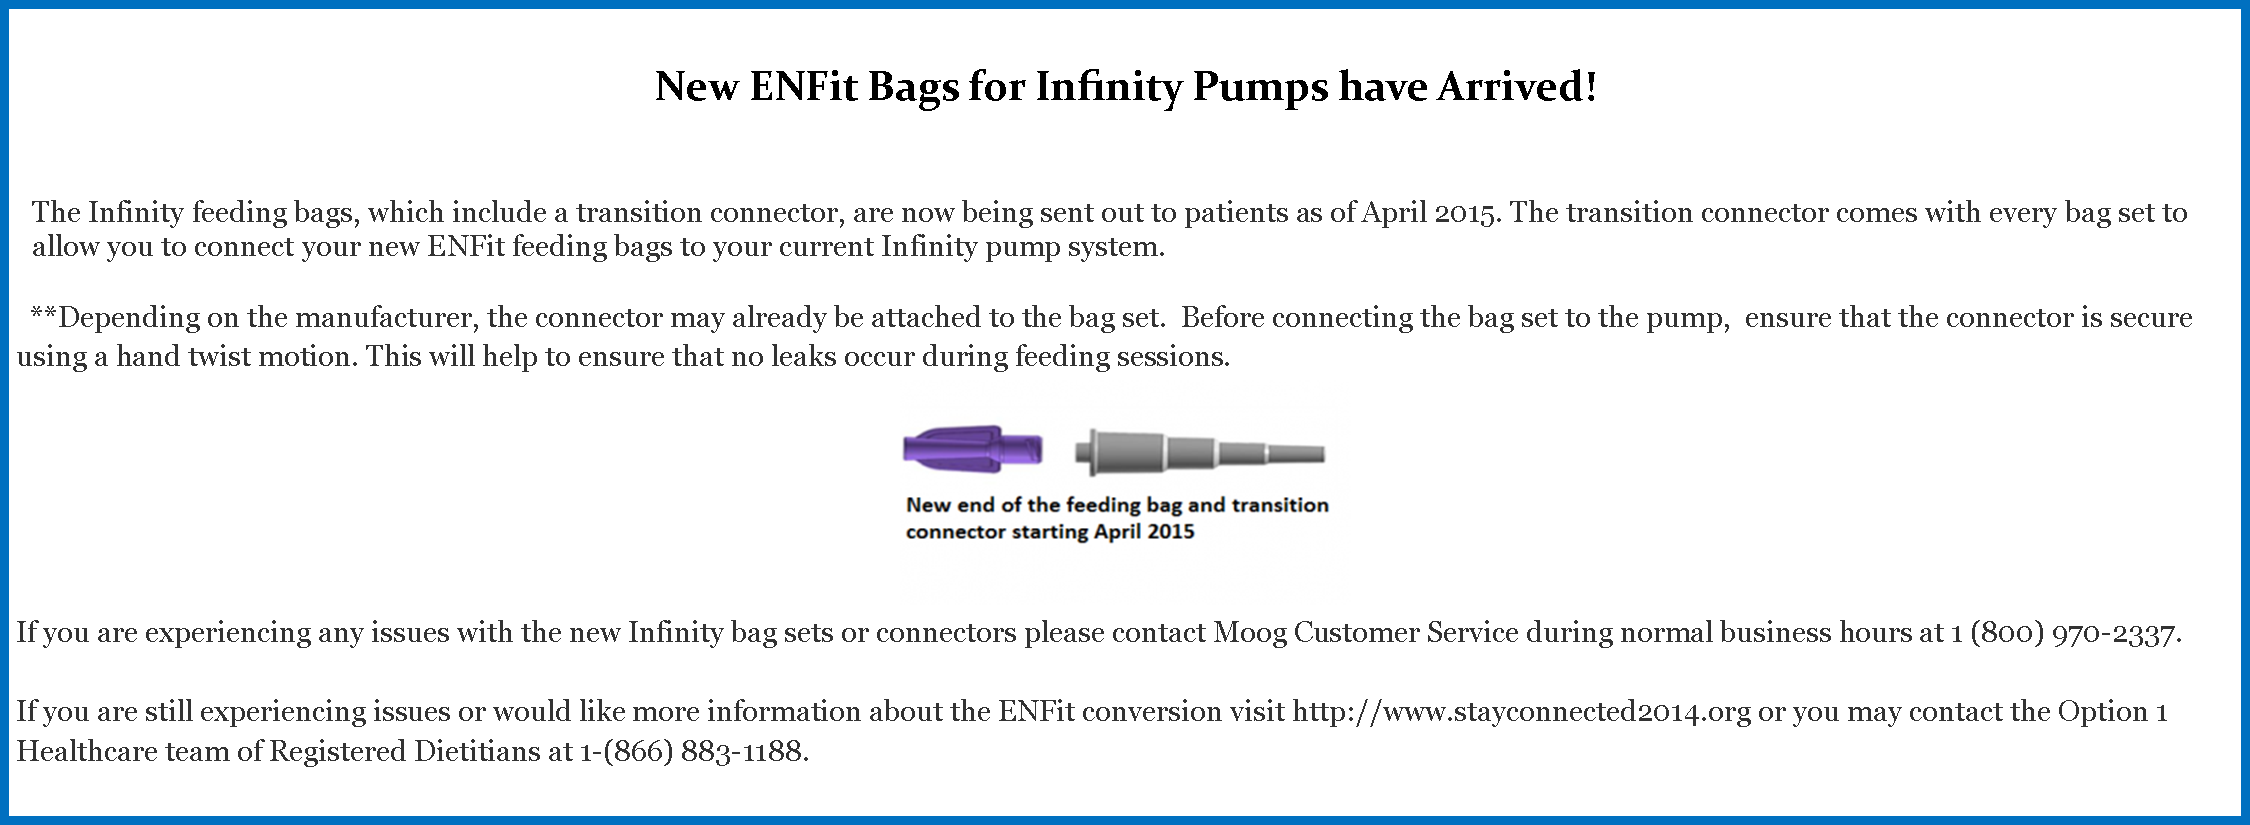 New-Enfit-bags-ns